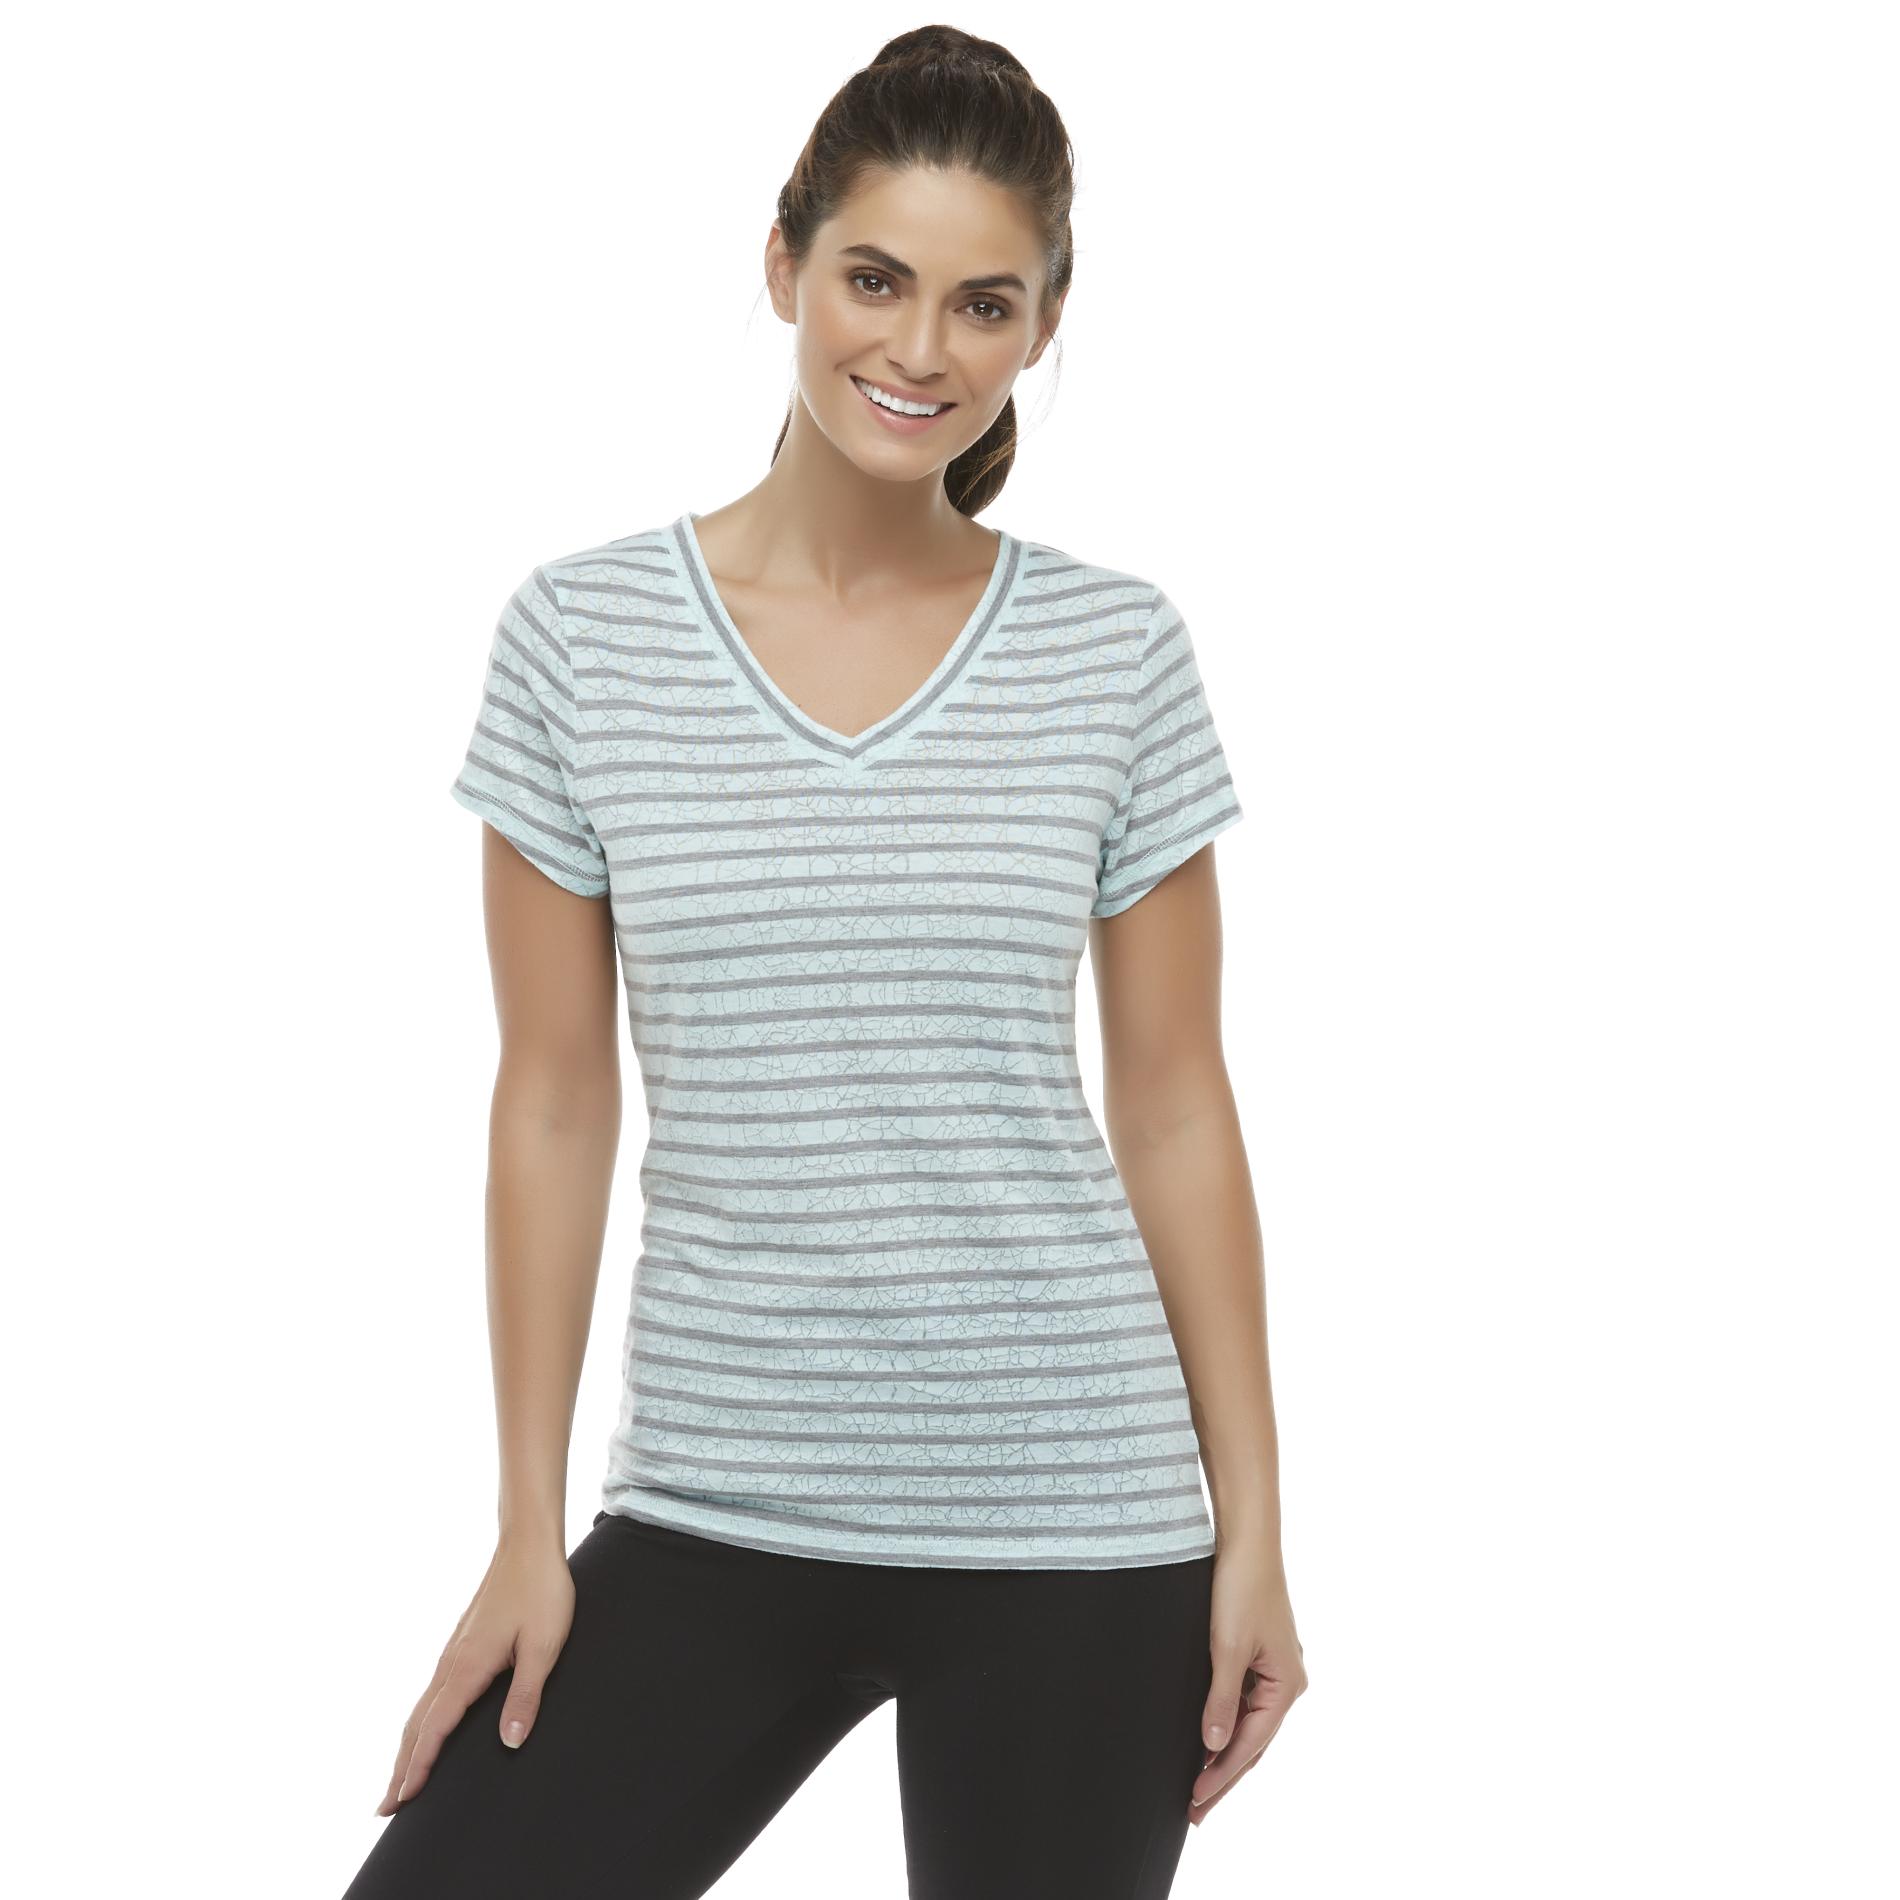 Danskin Women's Burnout T-Shirt - Striped